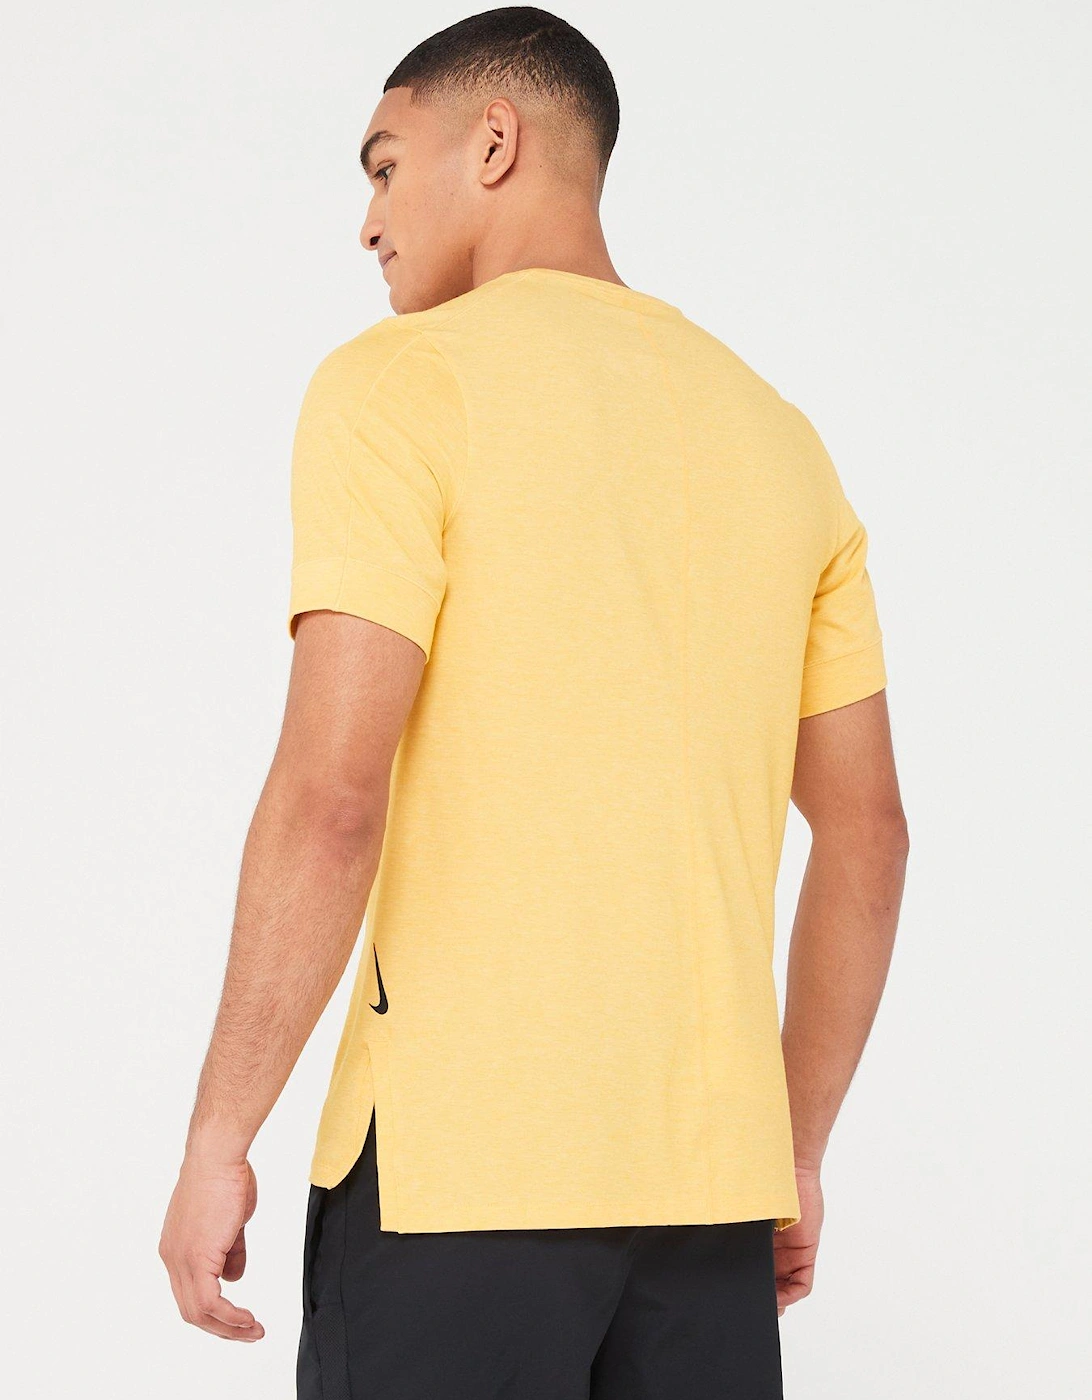 Train Dri Fit Yoga T-shirt - Yellow